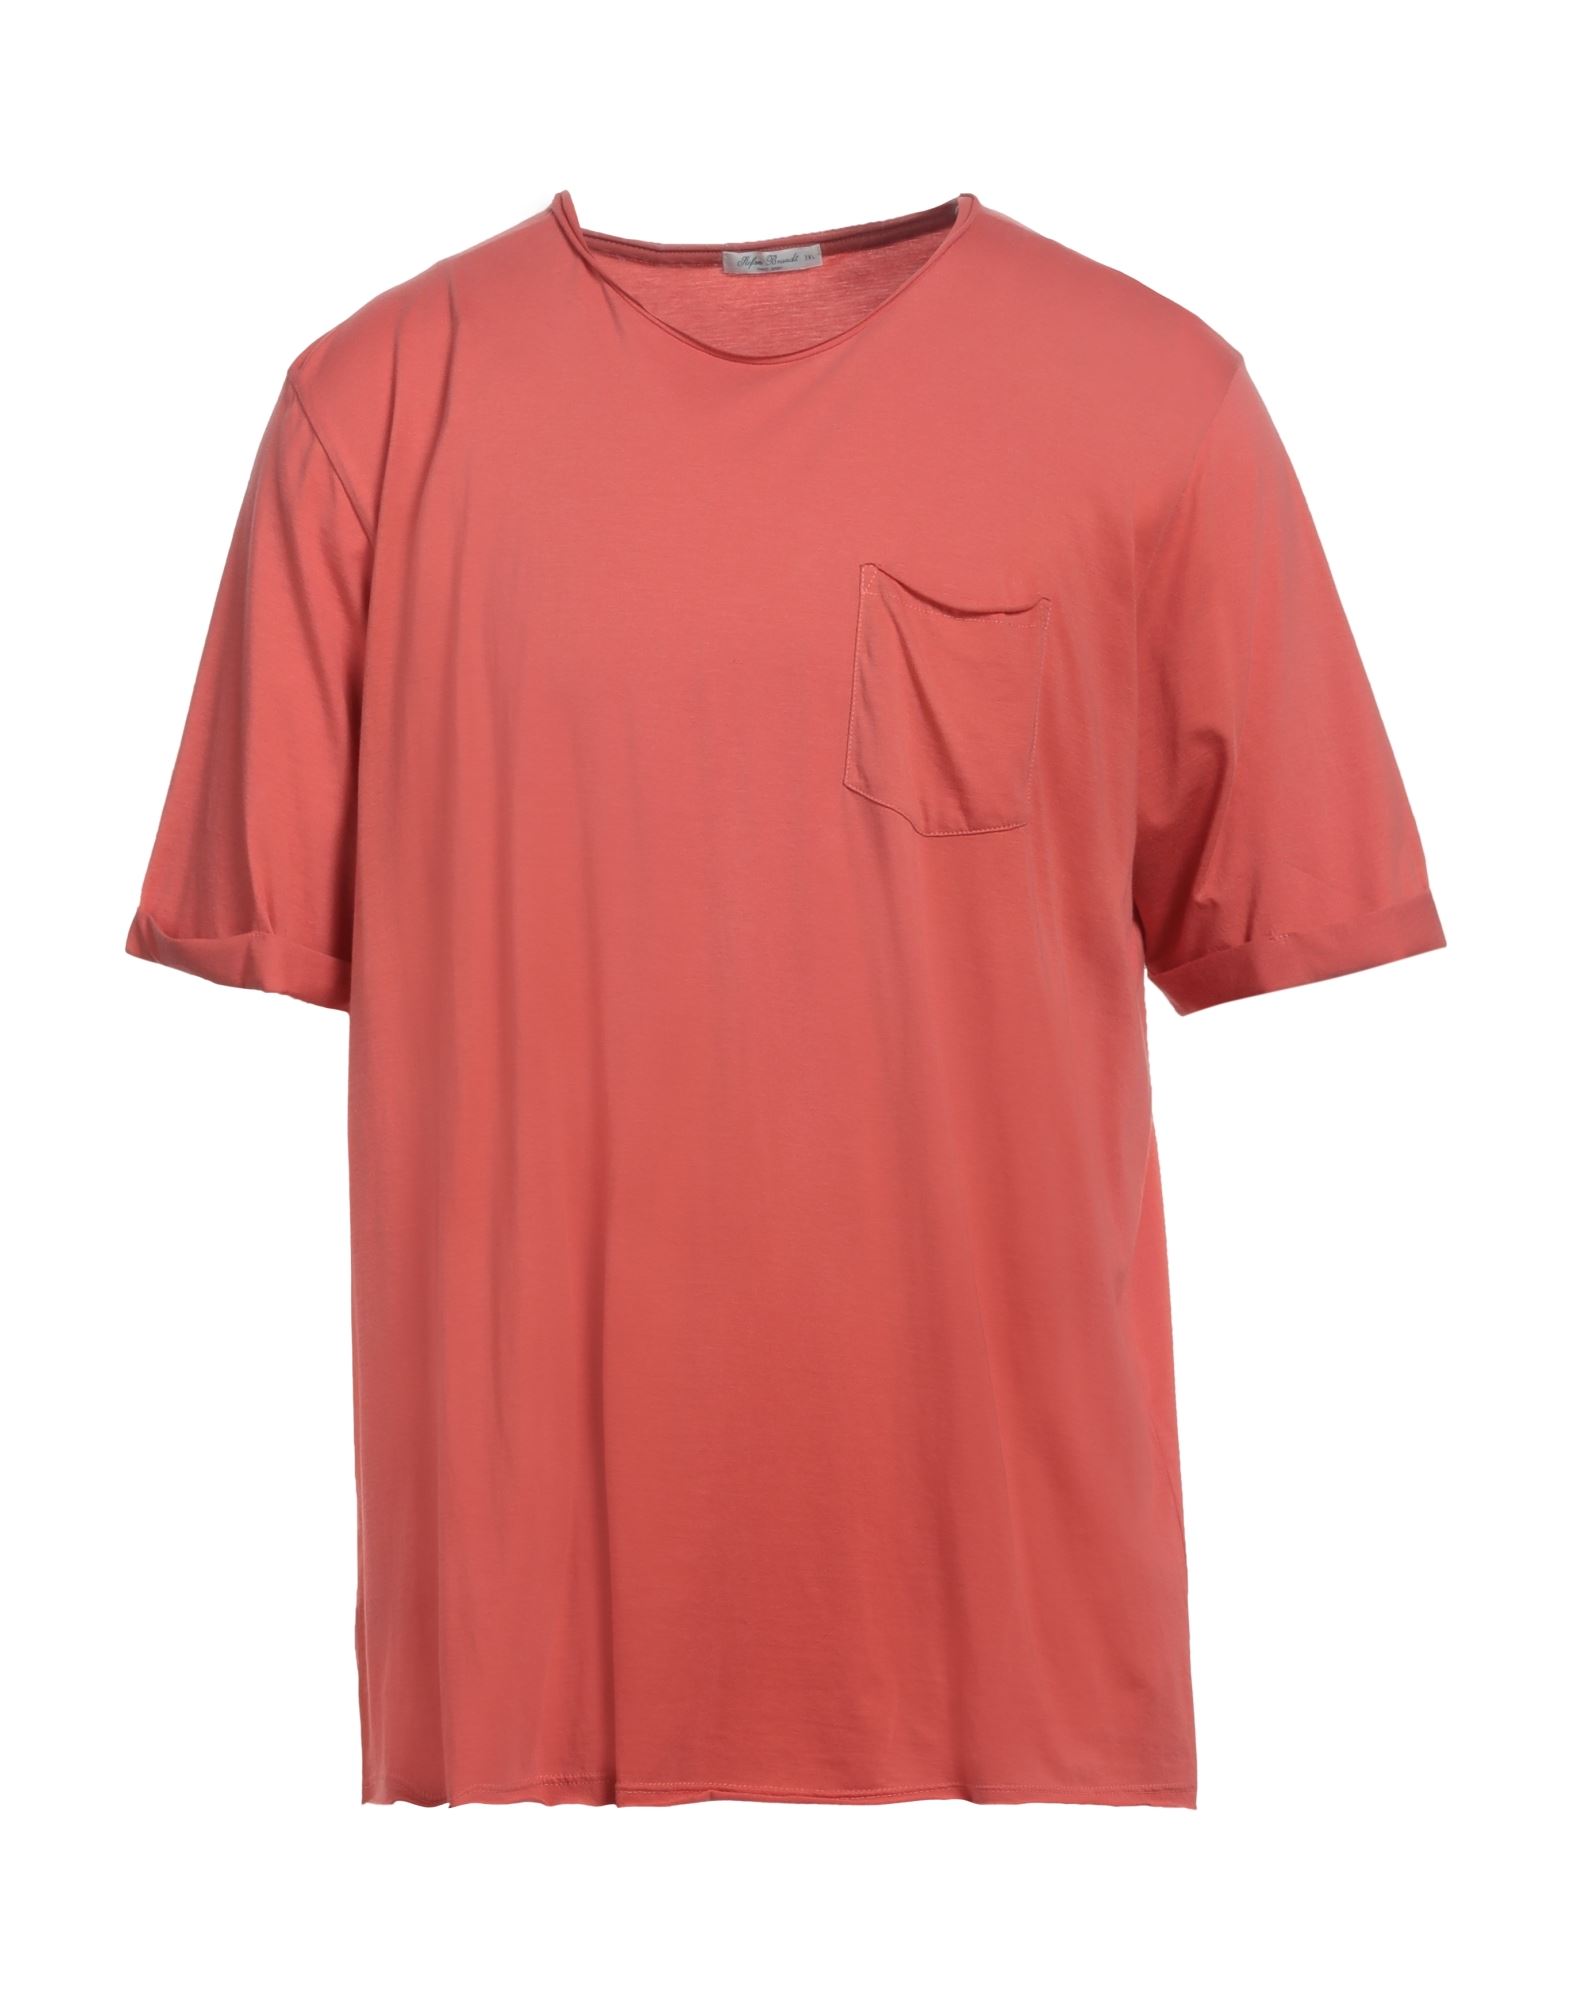 Stefan Brandt T-shirts In Salmon Pink